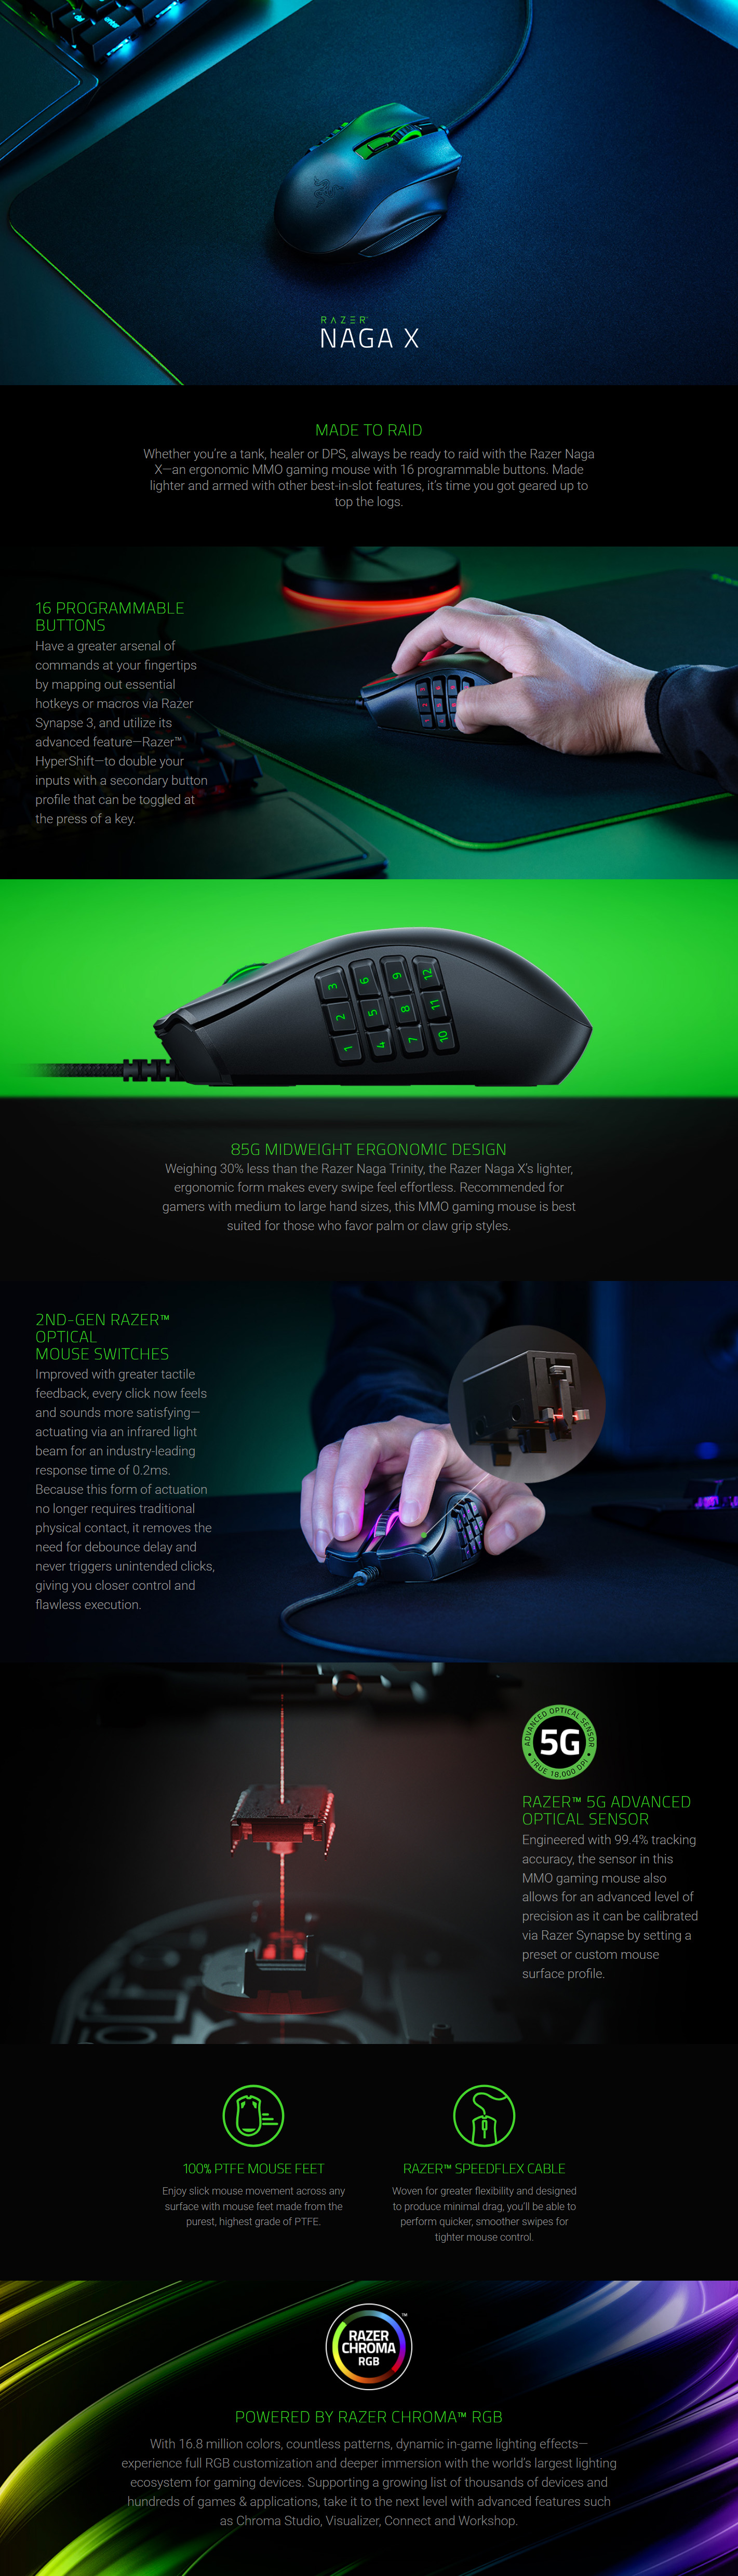 Razer-Naga-X-MMO-Wired-Gaming-Mouse-1